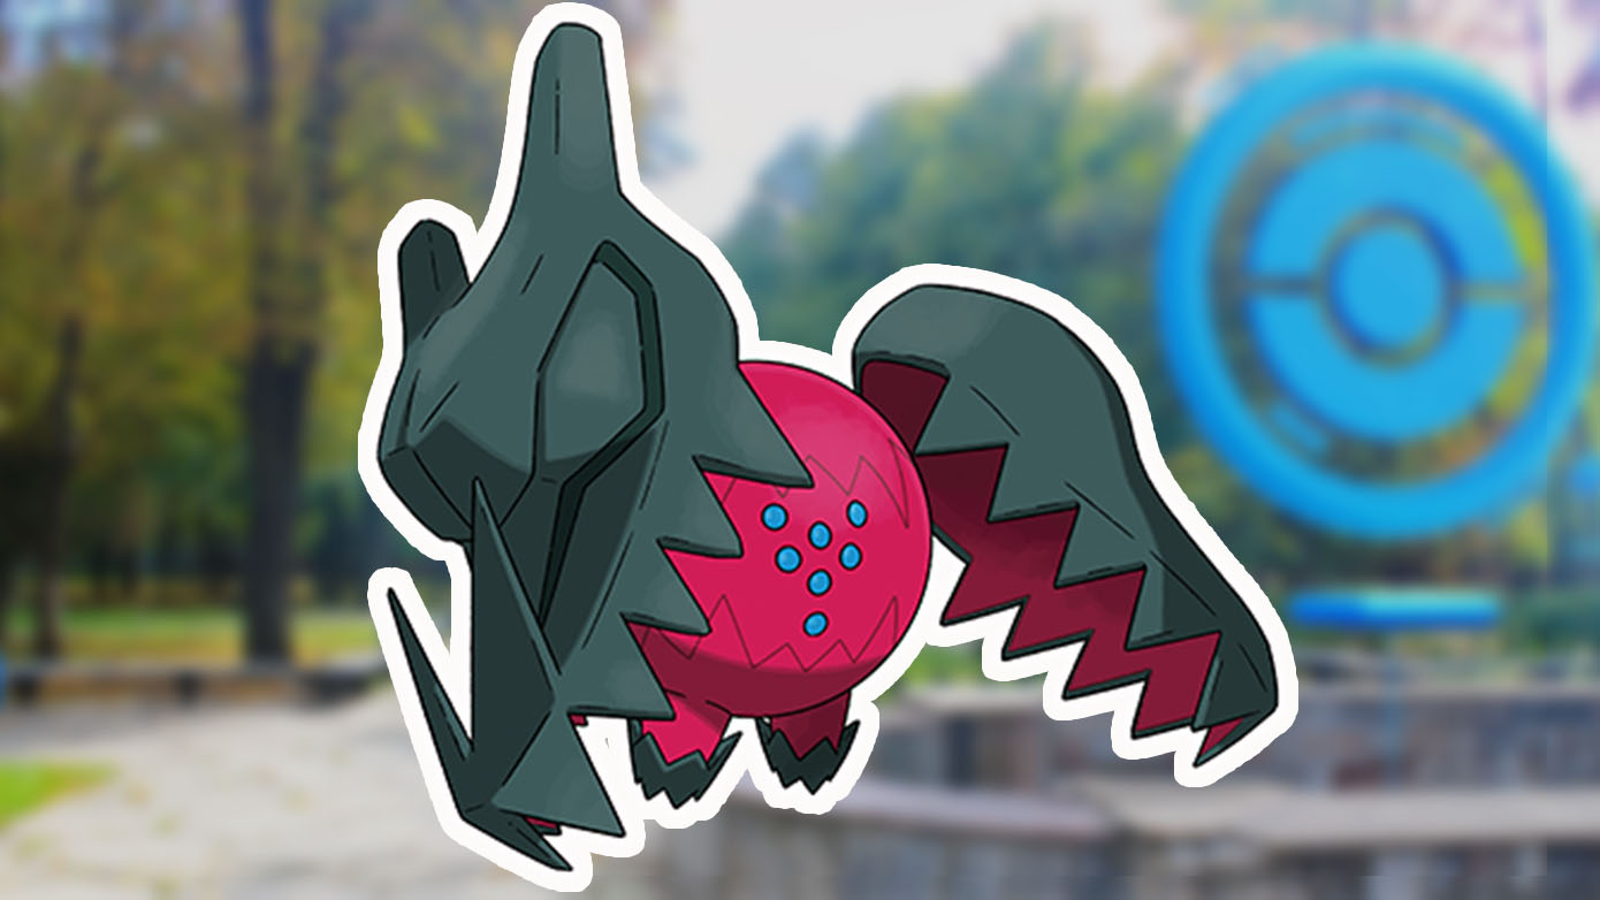 Pokémon Go Regigigas counters, weaknesses and moveset explained